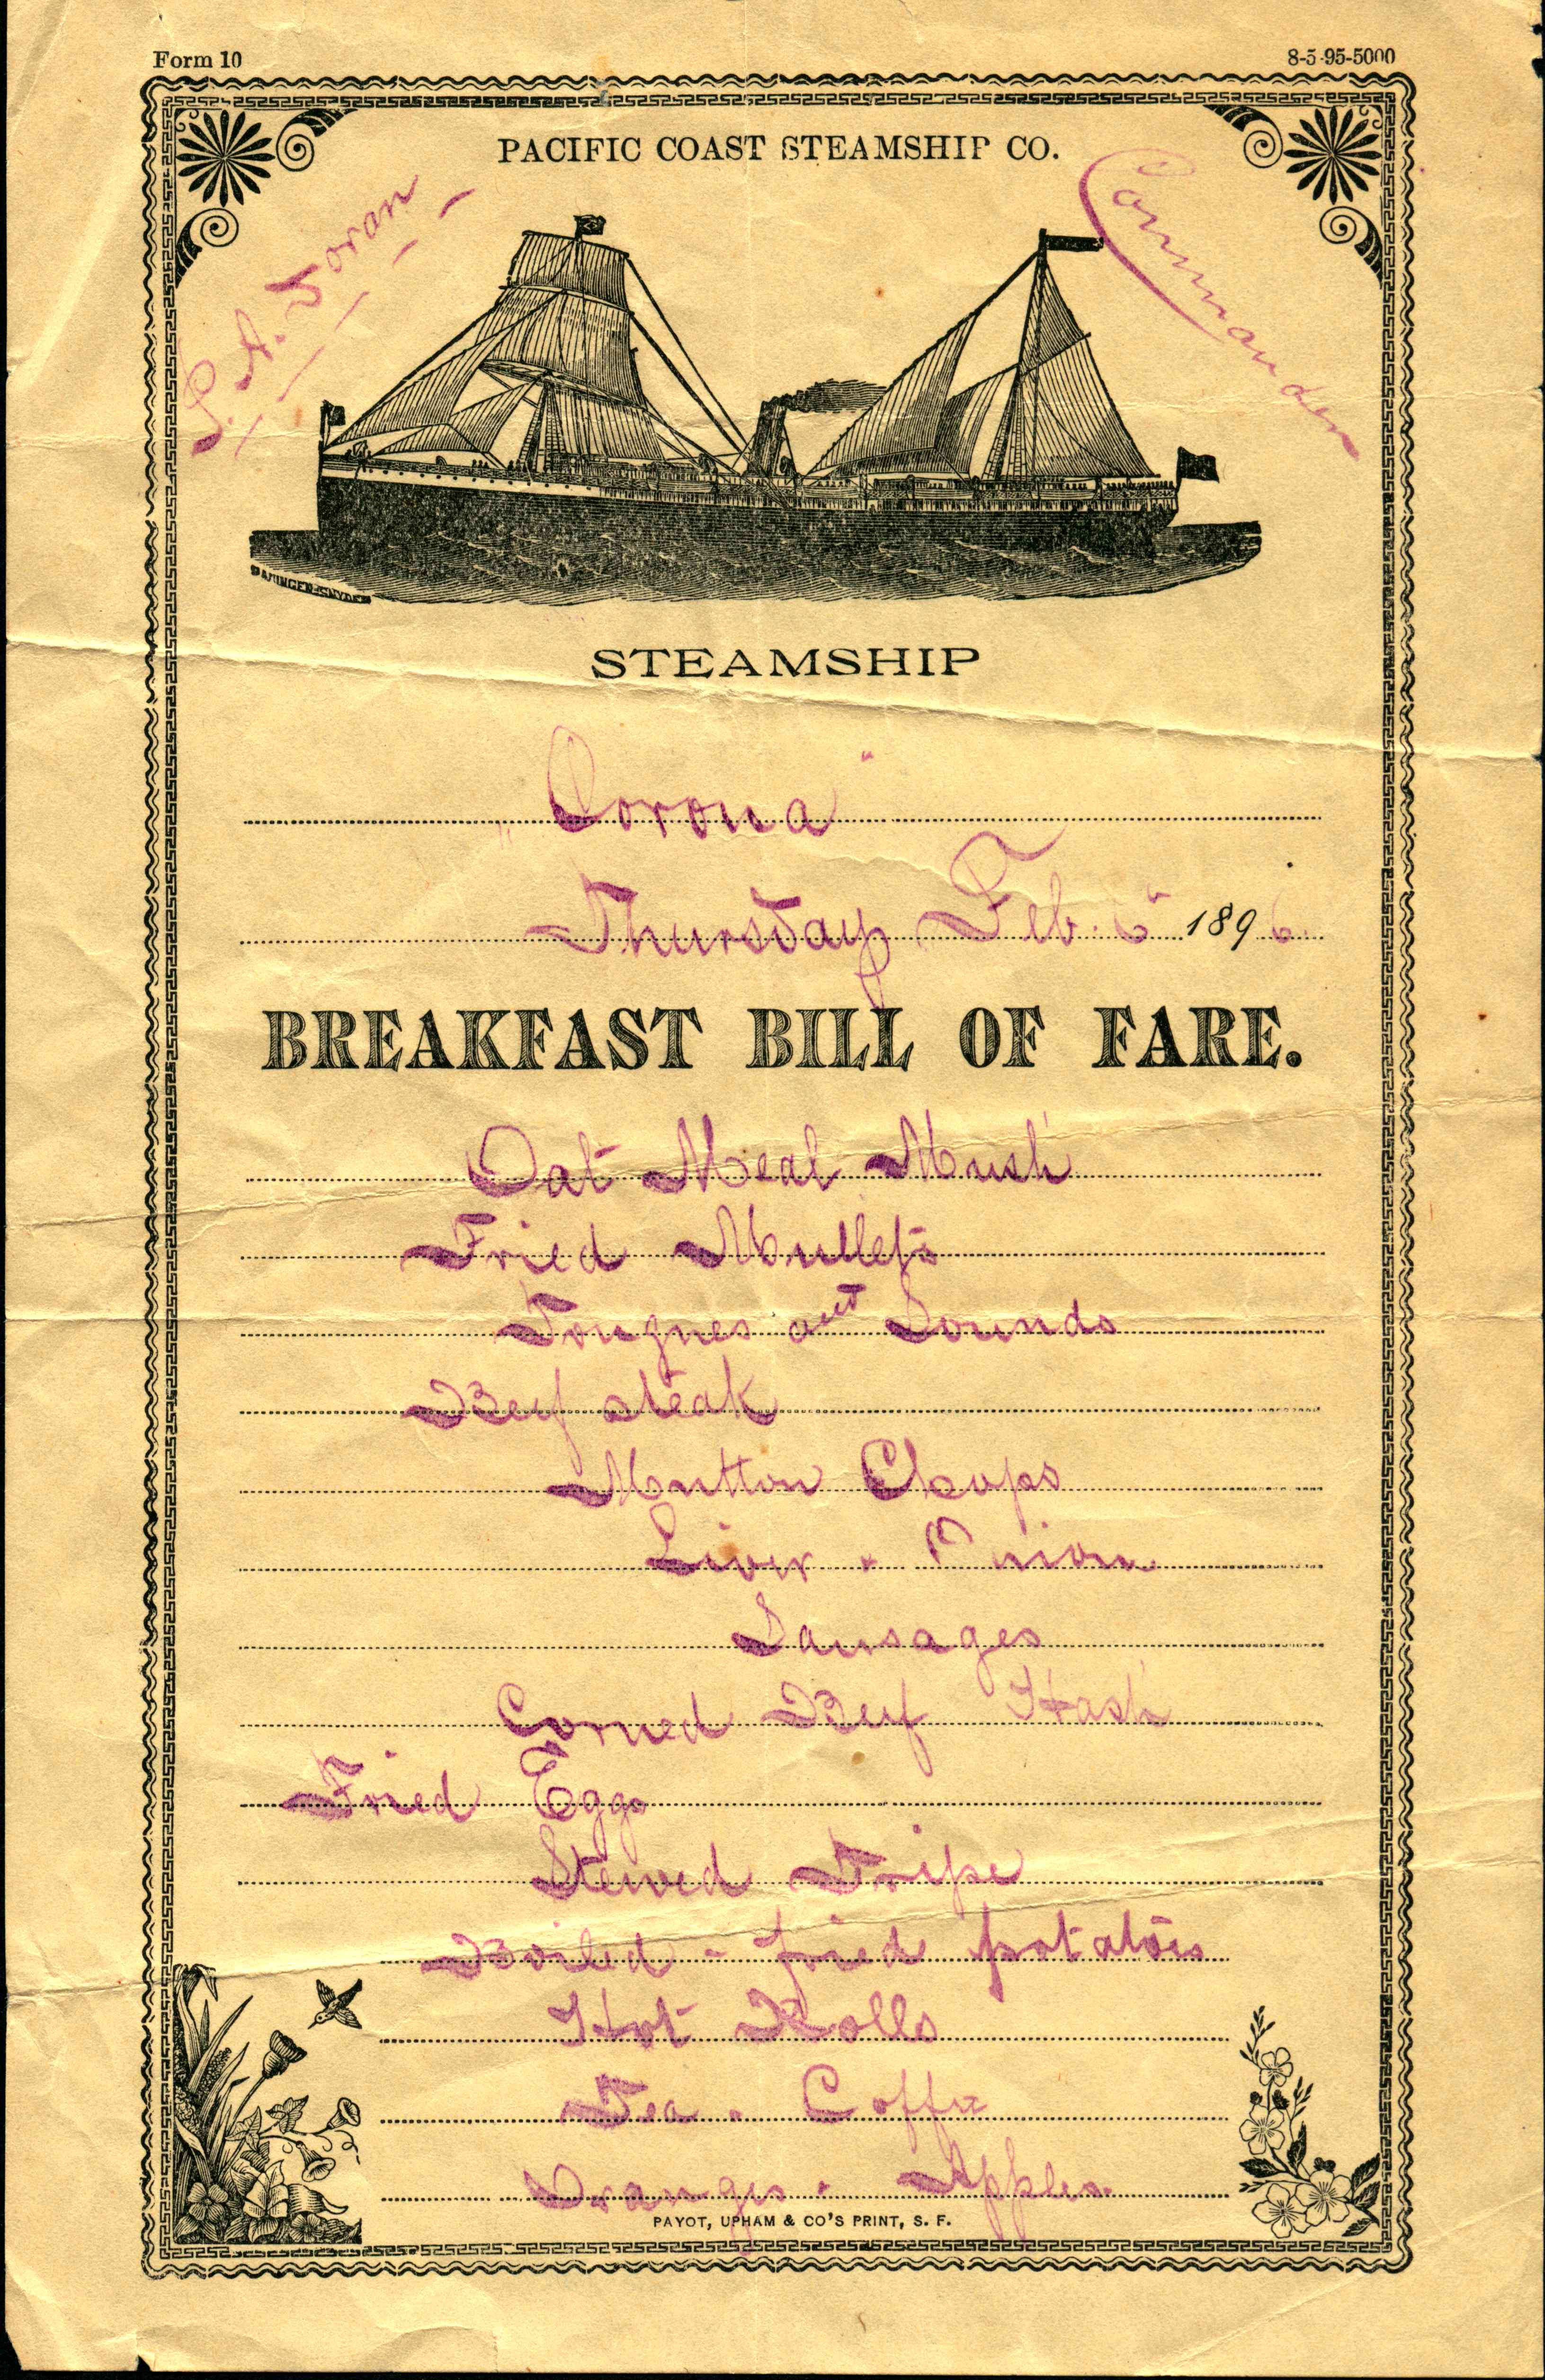 A Steamship at the top of the menu